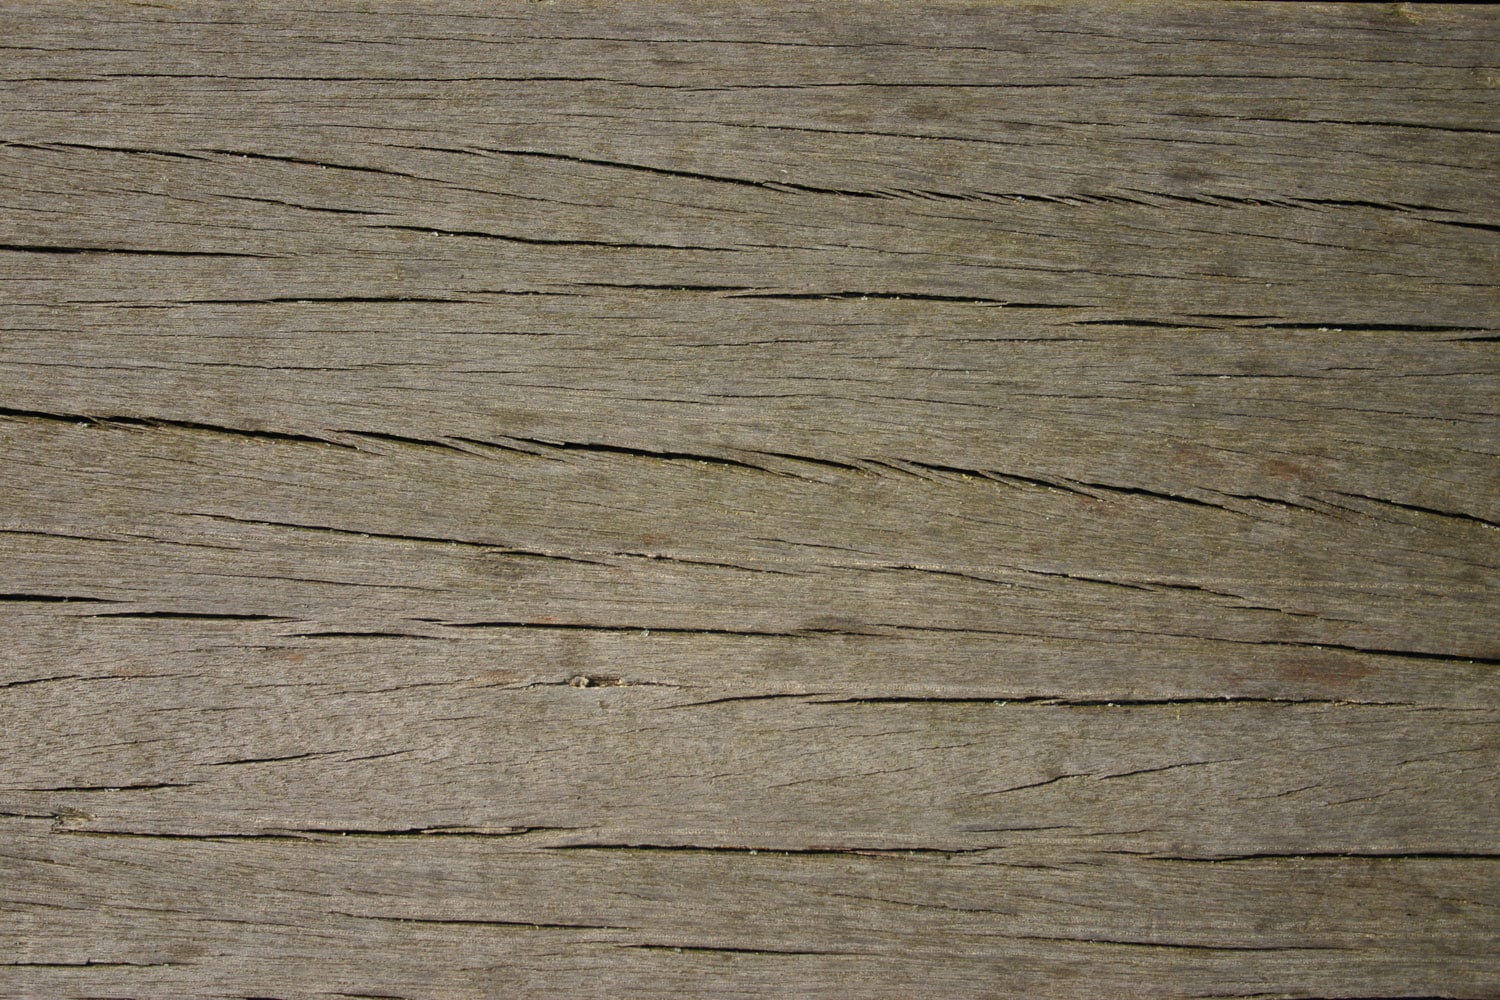 Greenheart timber